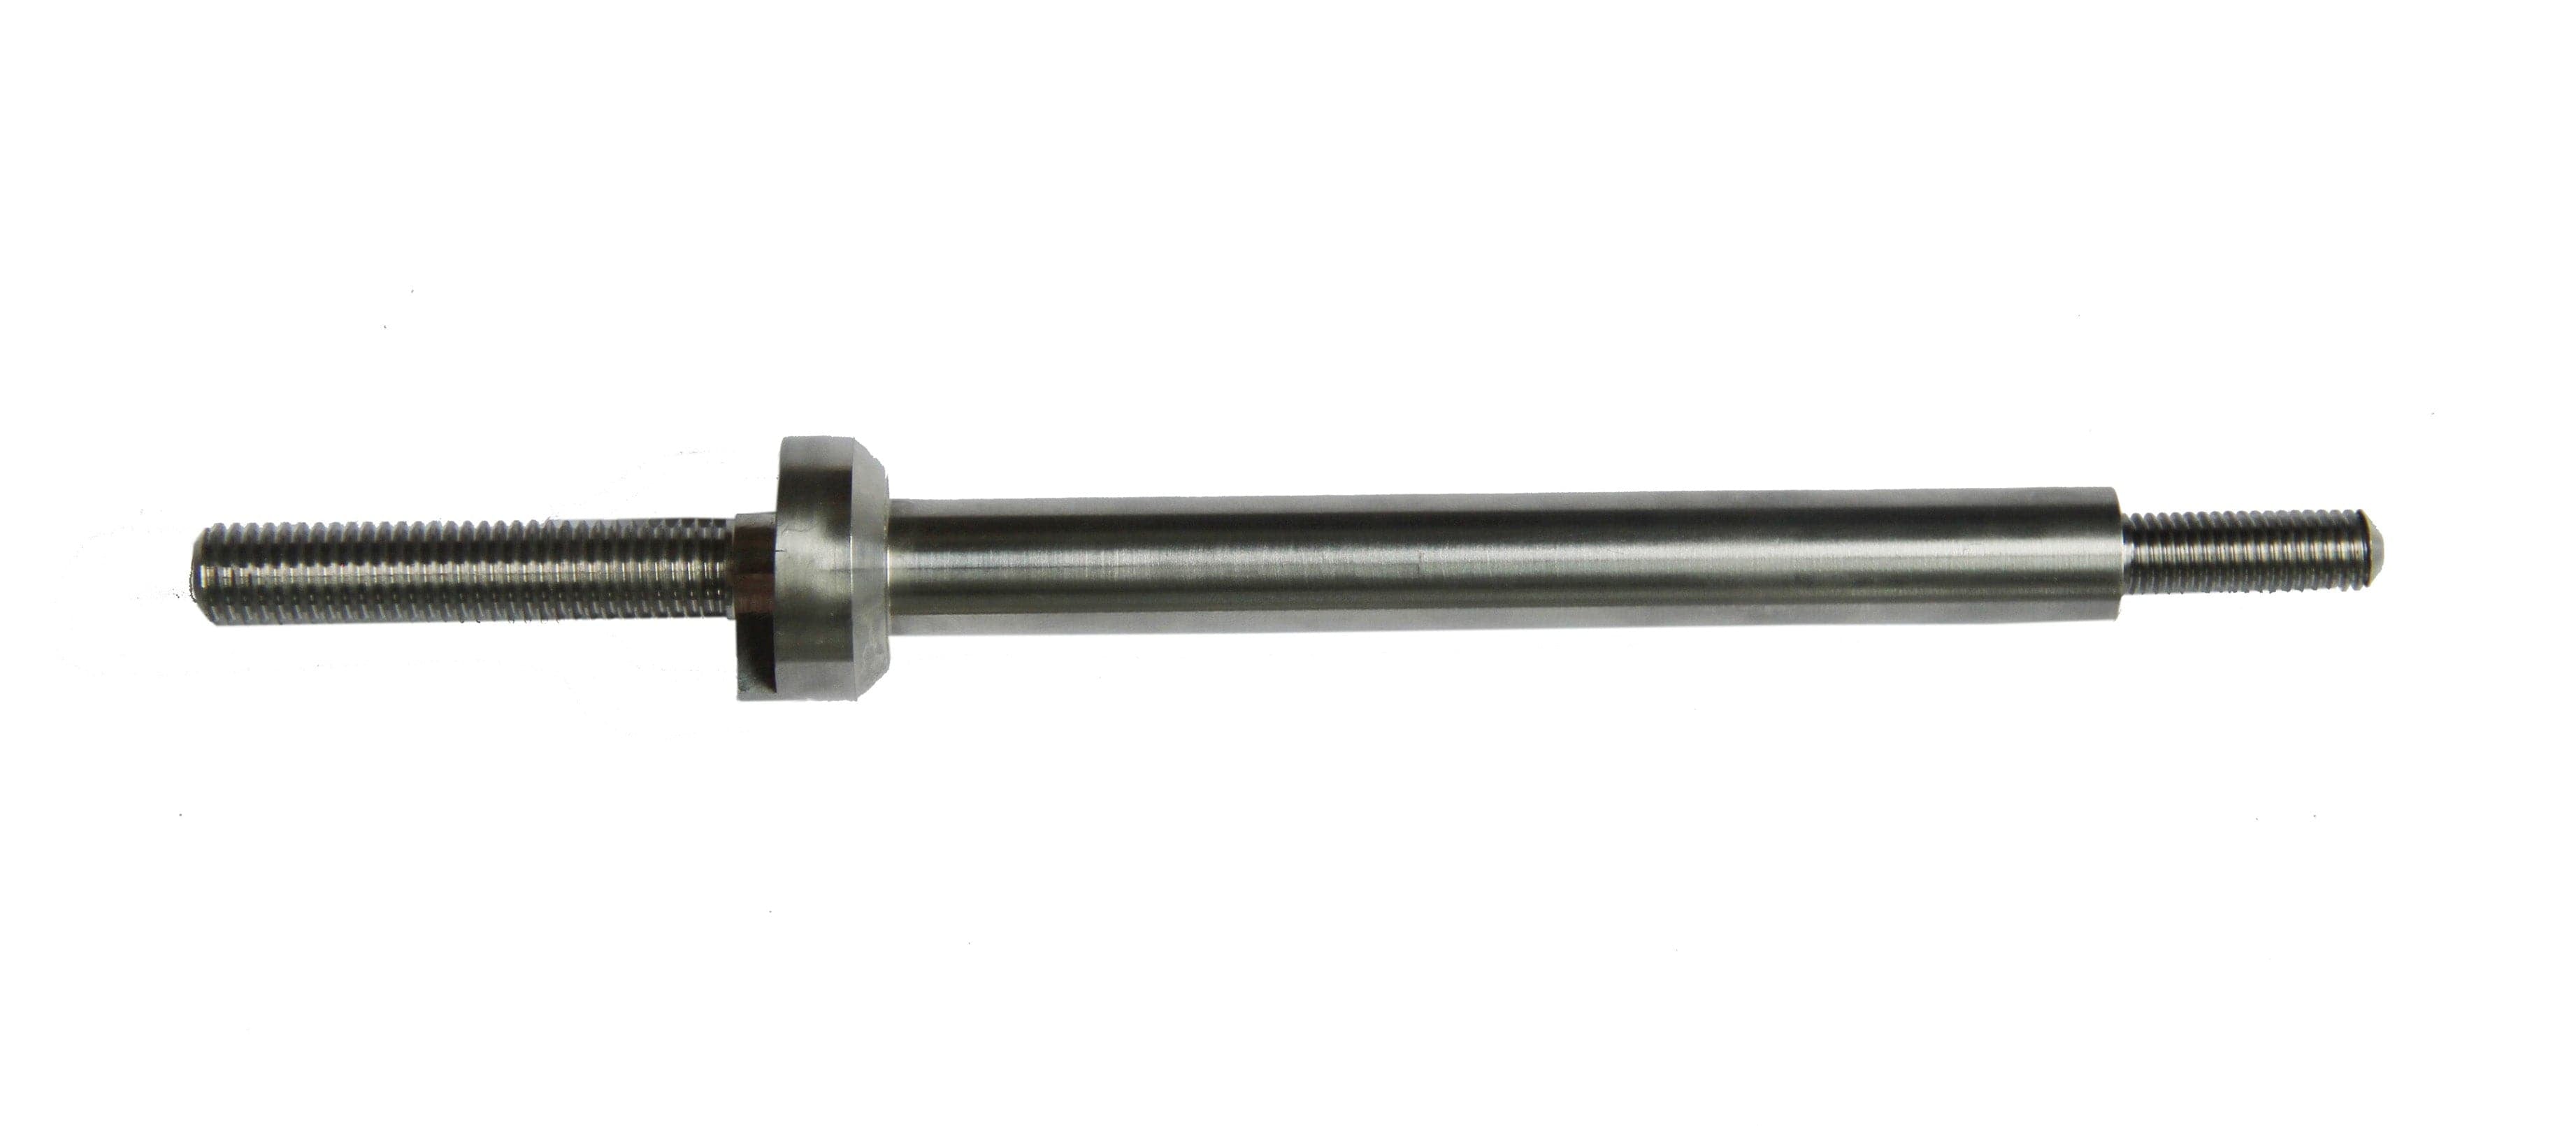 ZJ 316L Stainless Steel Pin For Sculling Oars / Sweep Oars (2 pcs/set) [Free Shipping]